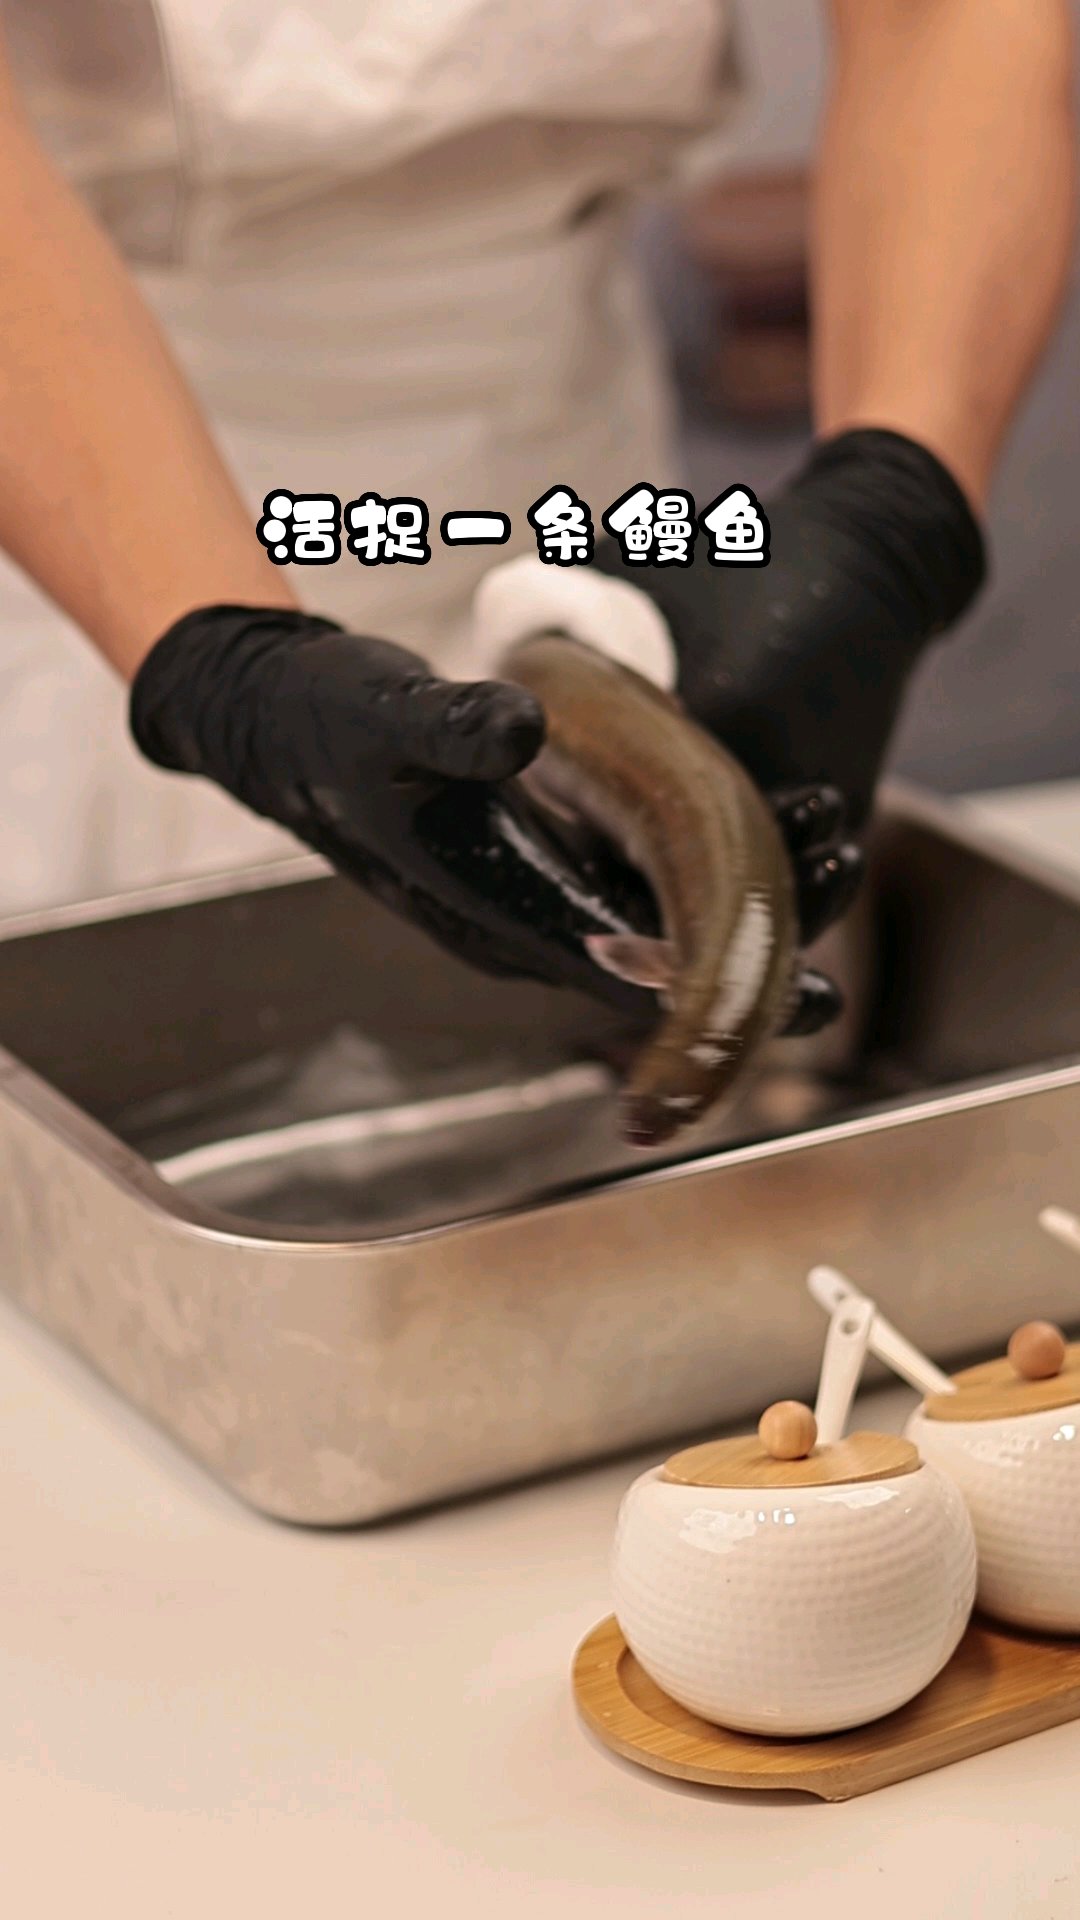 烤鳗鱼